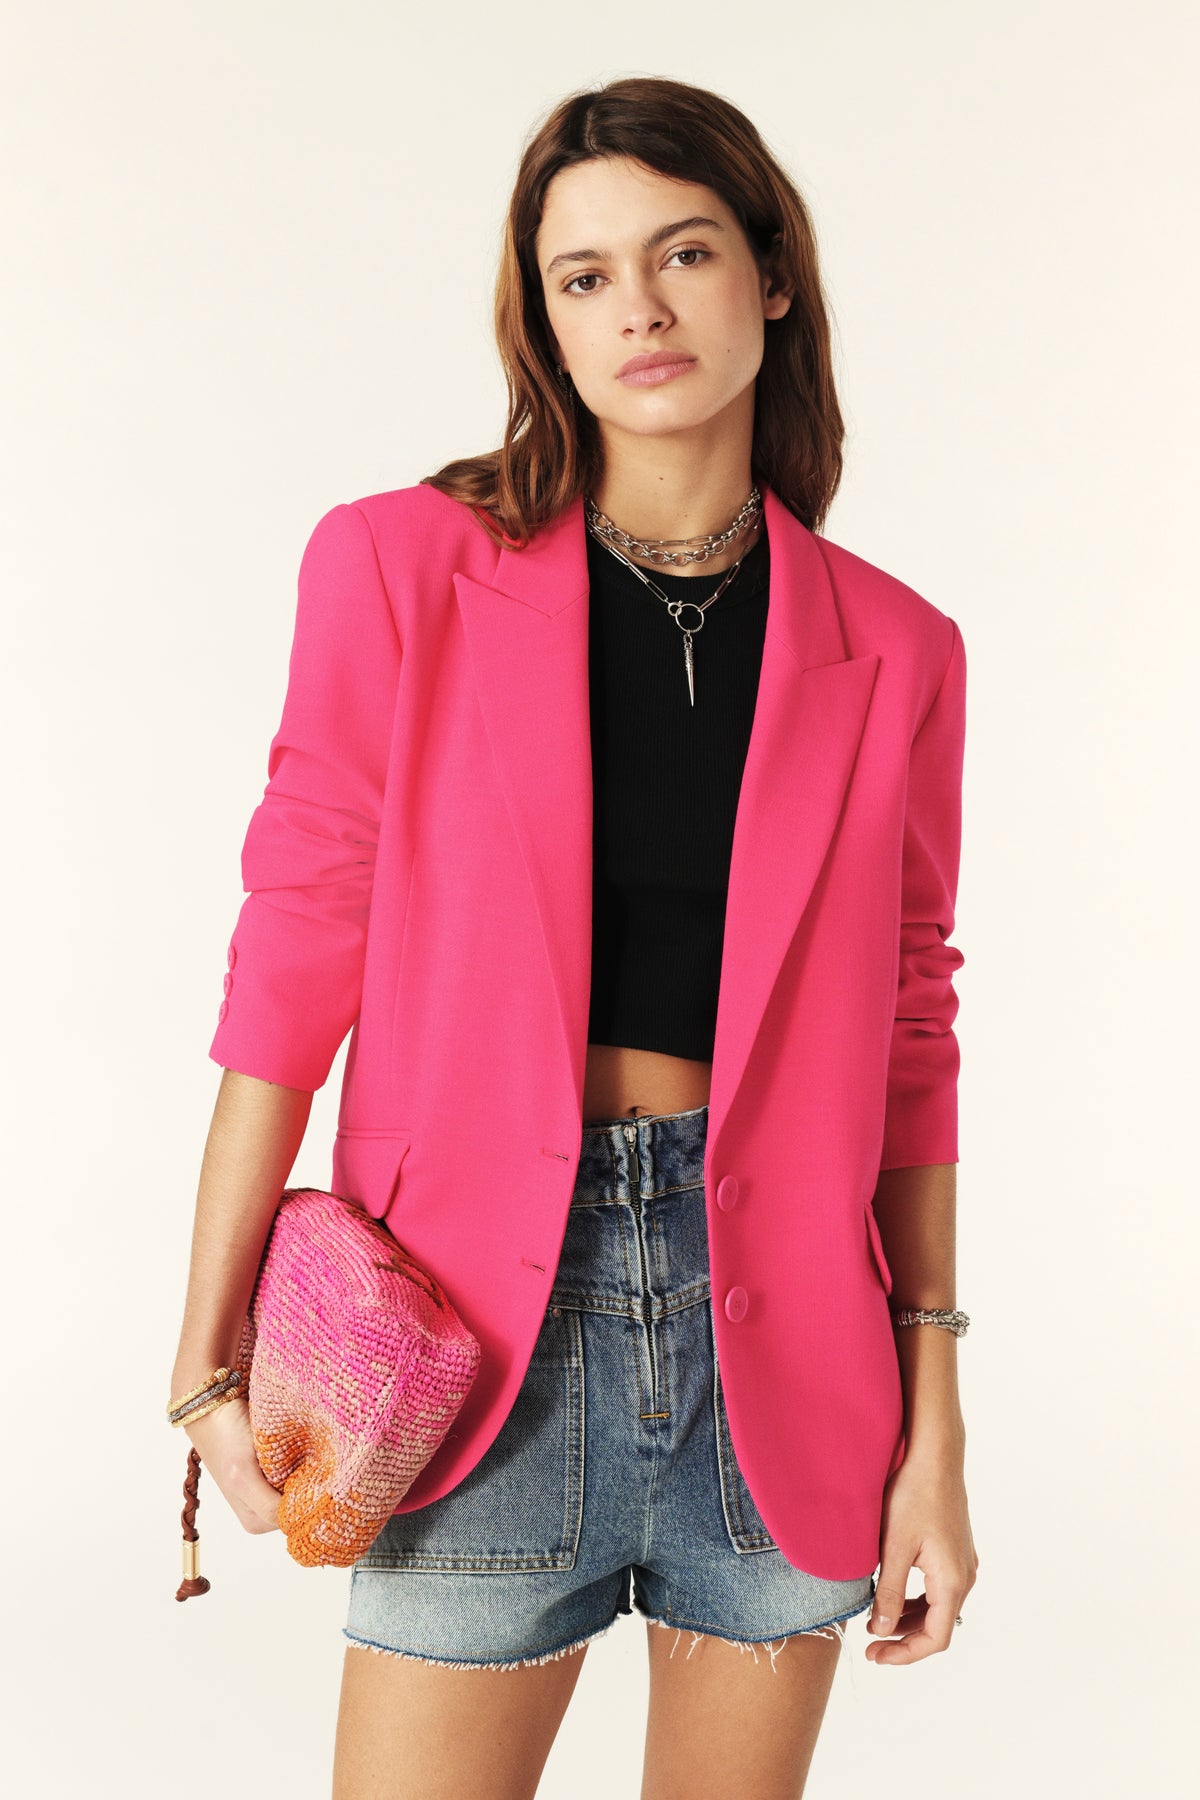 Bright pink slightly oversize blazer